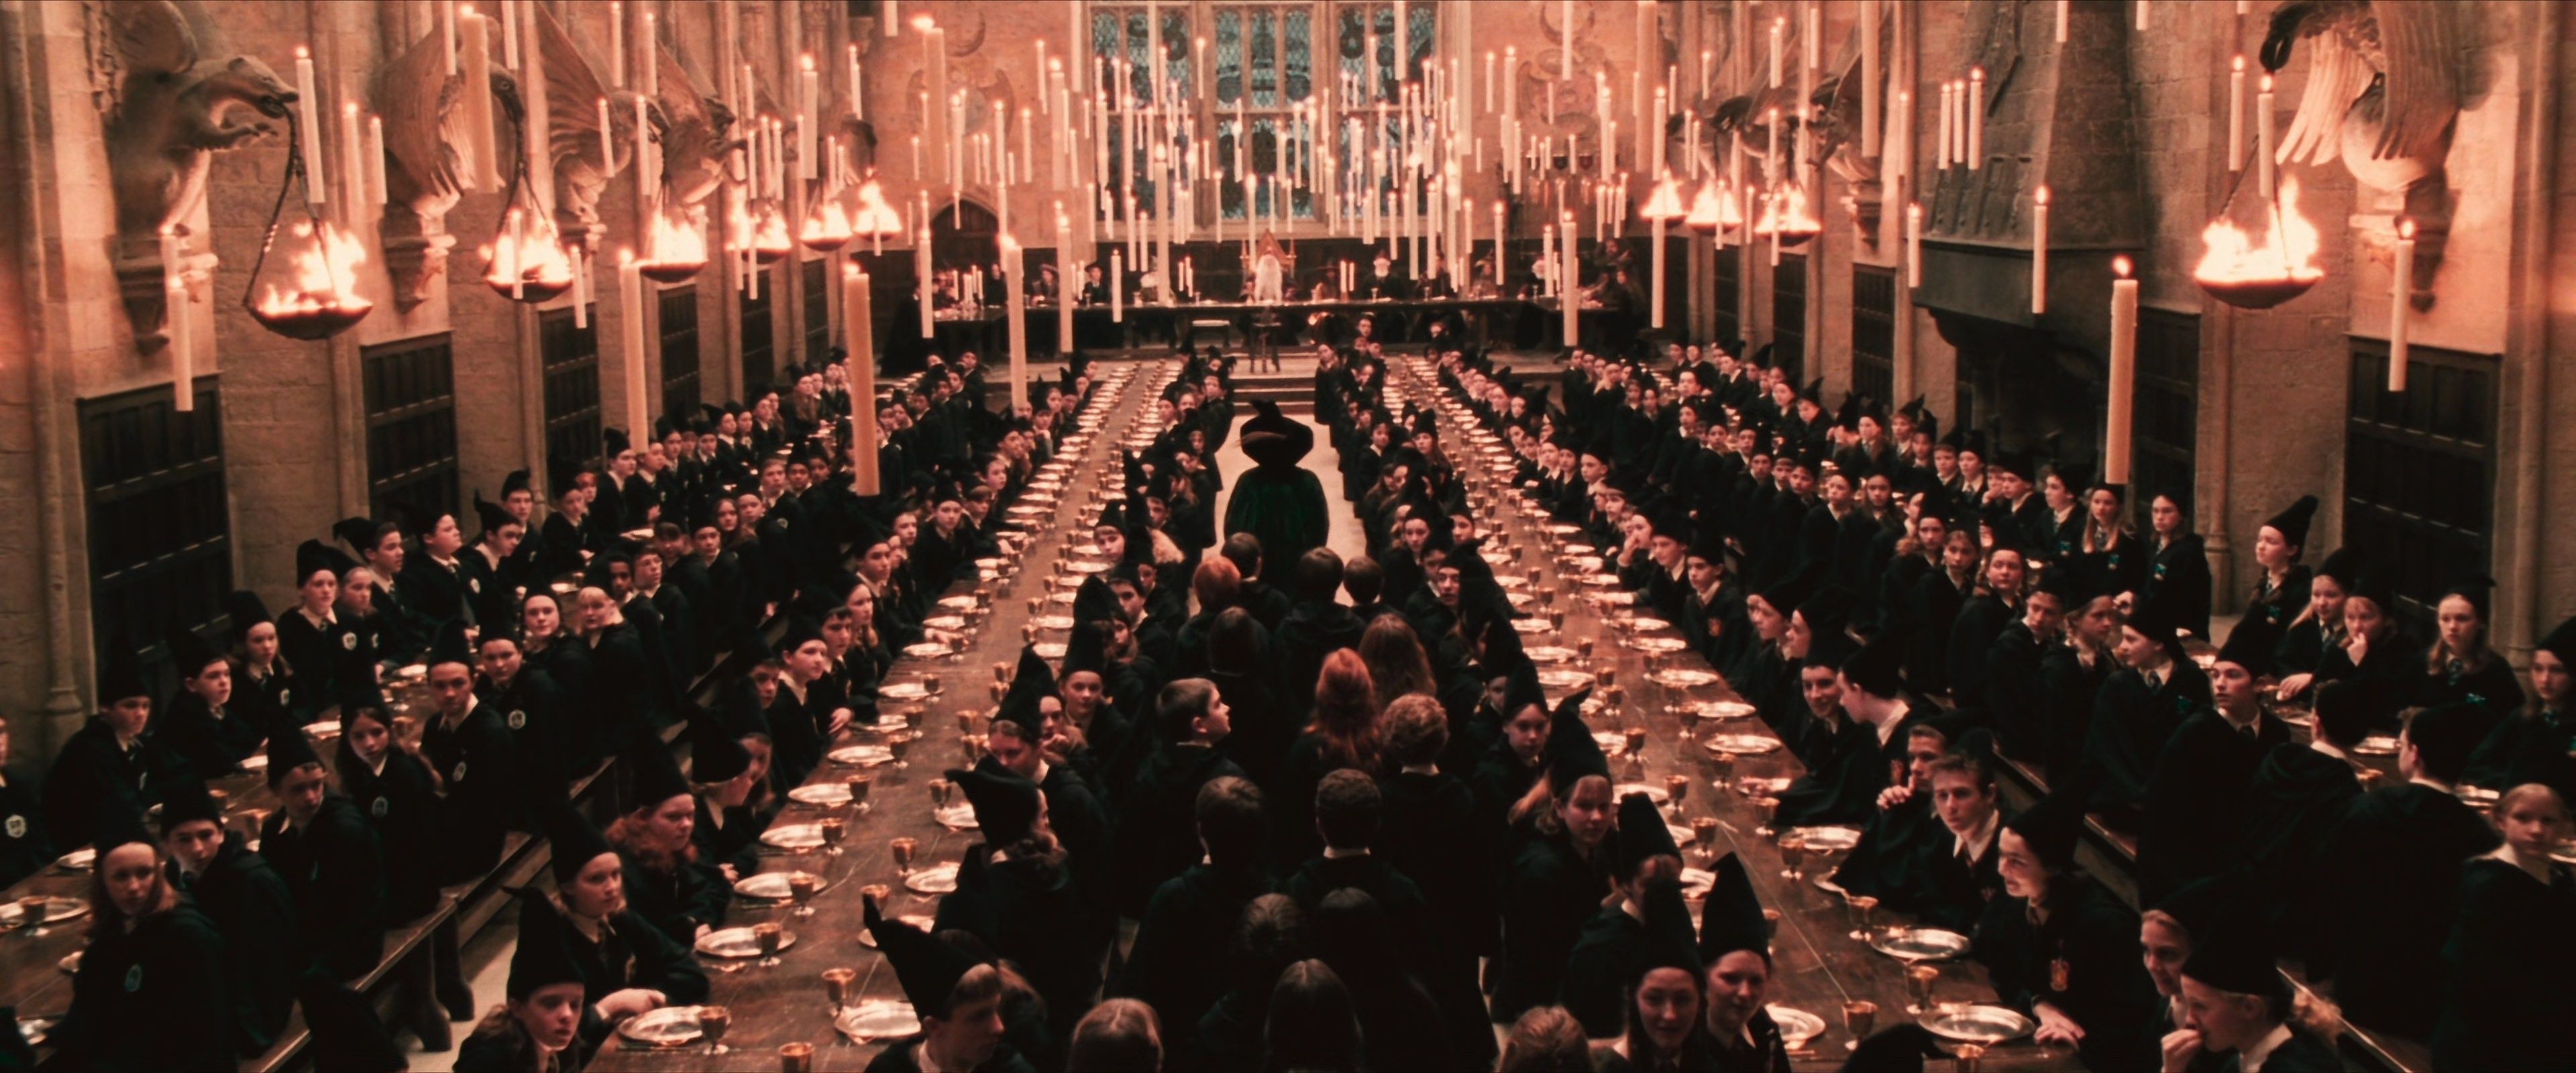 Harry Potter, Philosophers Stone, 4K movie, Hogwarts great hall, 3840x1600 Dual Screen Desktop